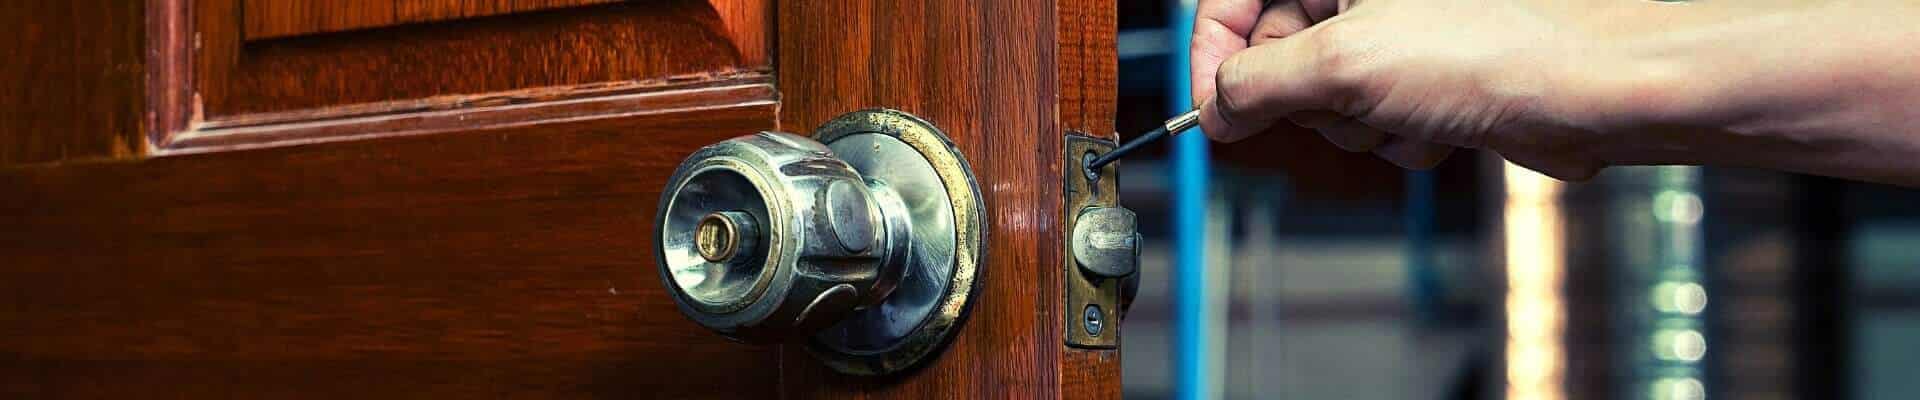 locksmith-in-chesterfield-va-Richmond-paul-service-lock